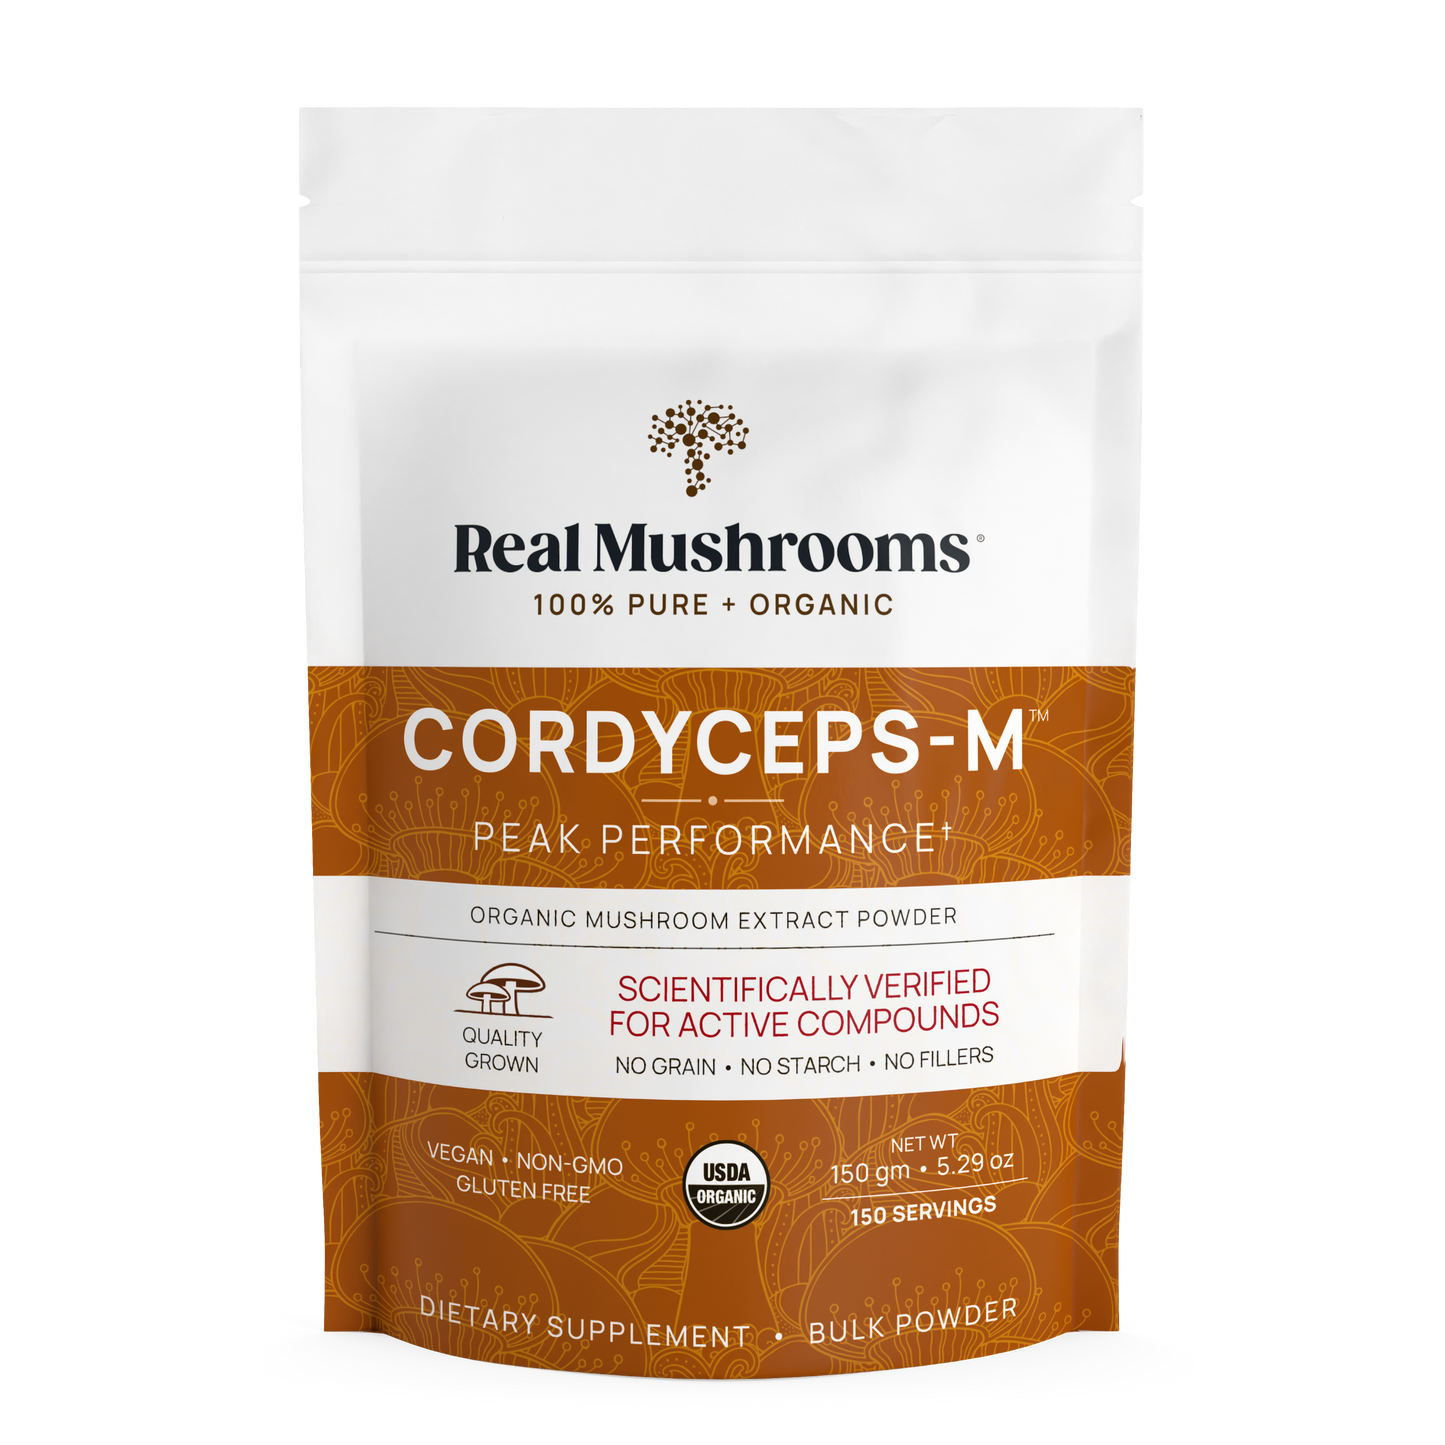 Real Mushrooms Organic Cordyceps Mushroom Extract Powder for Pets.